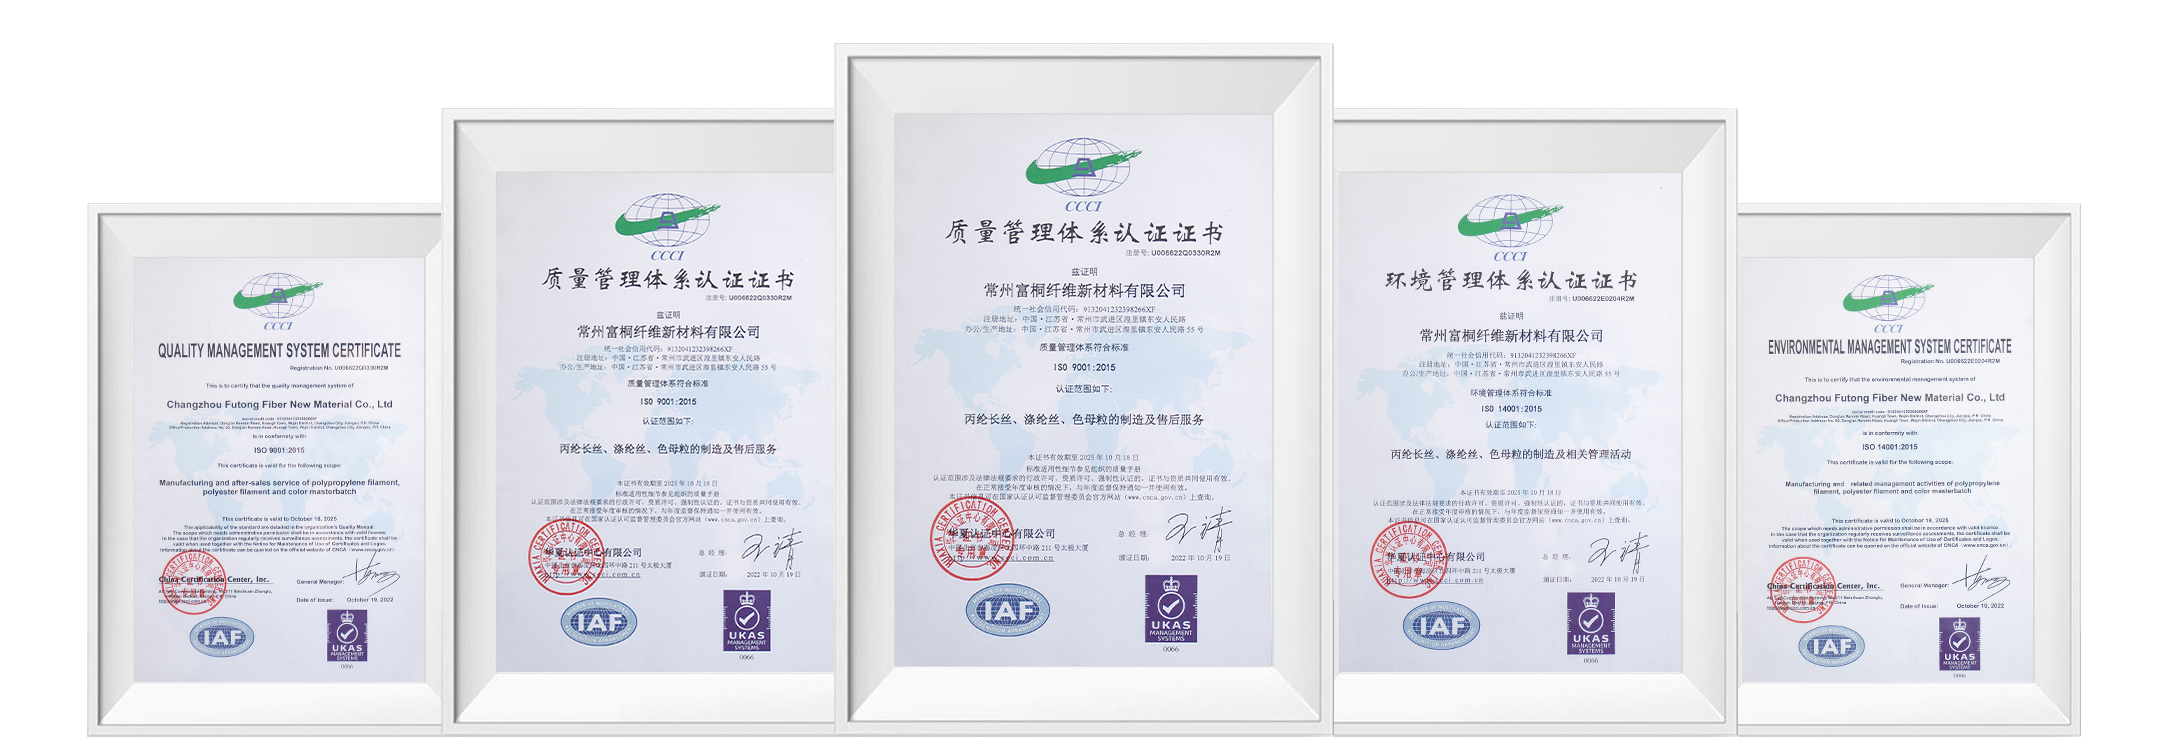 Changzhou Futong Fiber New Material Co., Ltd.